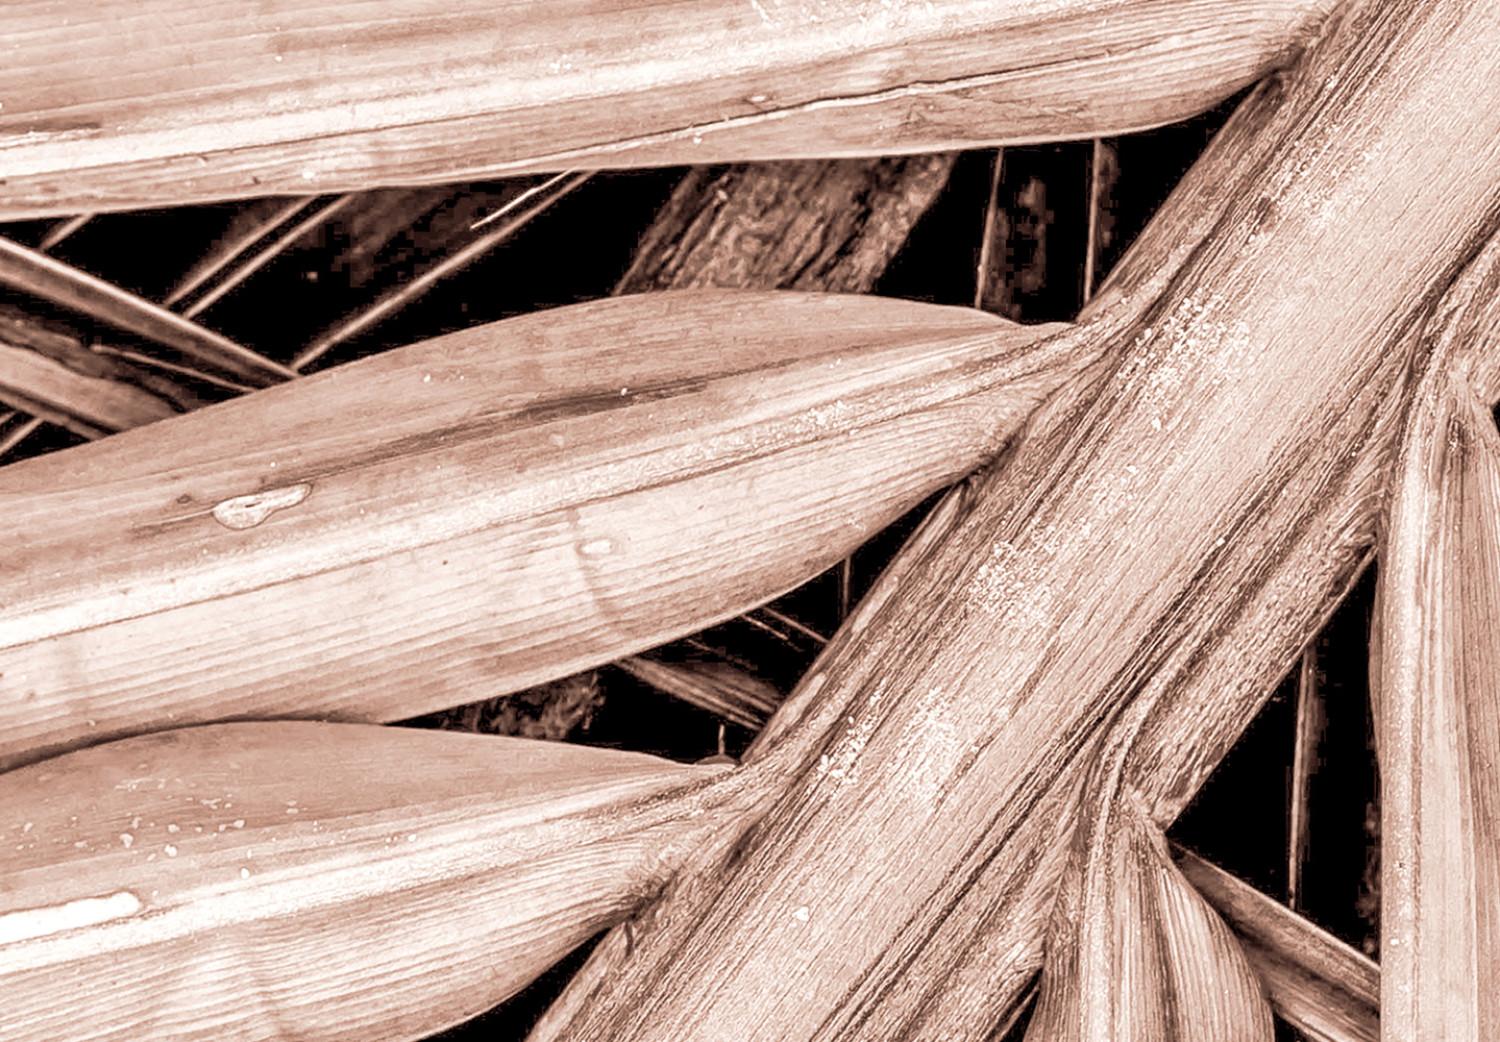 Cuadro Palma seca - hoja de palma seca colocada en un ángulo agudo